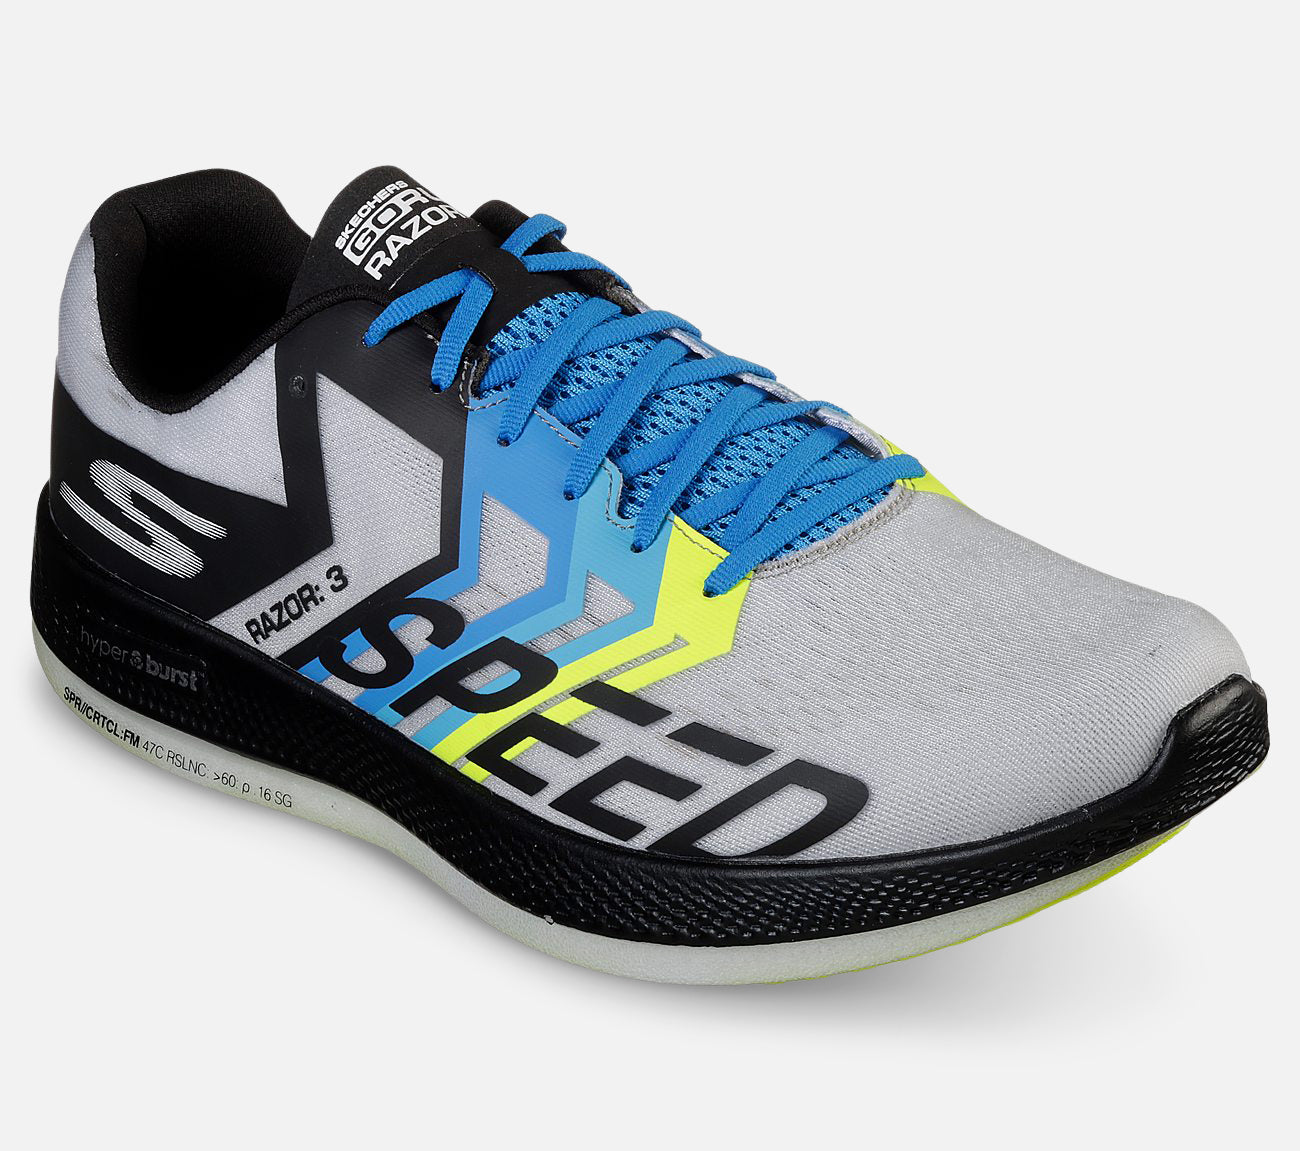 Unisex GOrun Razor 3 - Hyper Shoe Skechers